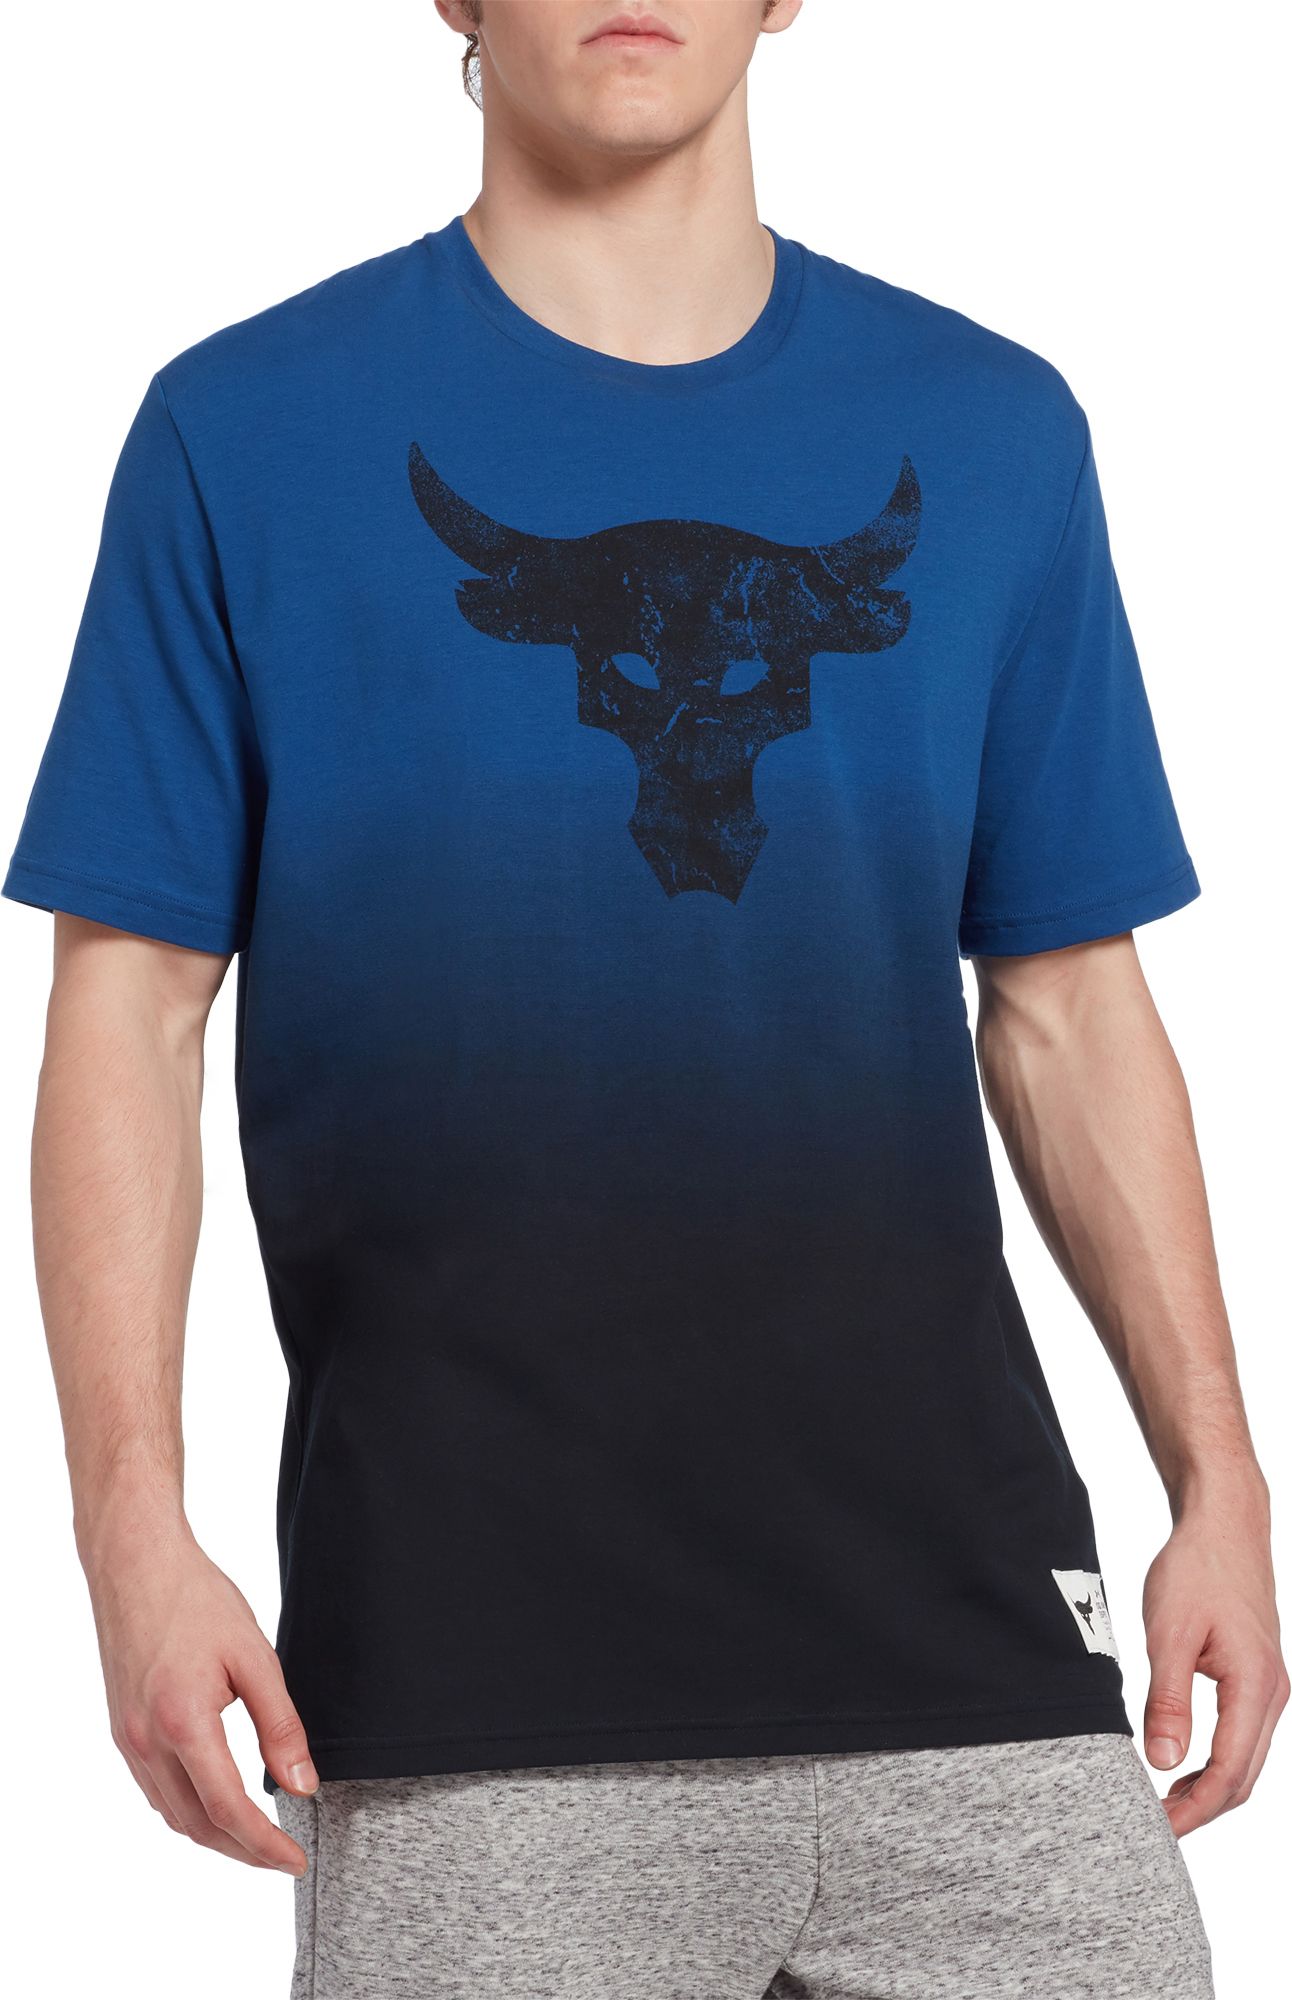 the rock brahma bull shirt